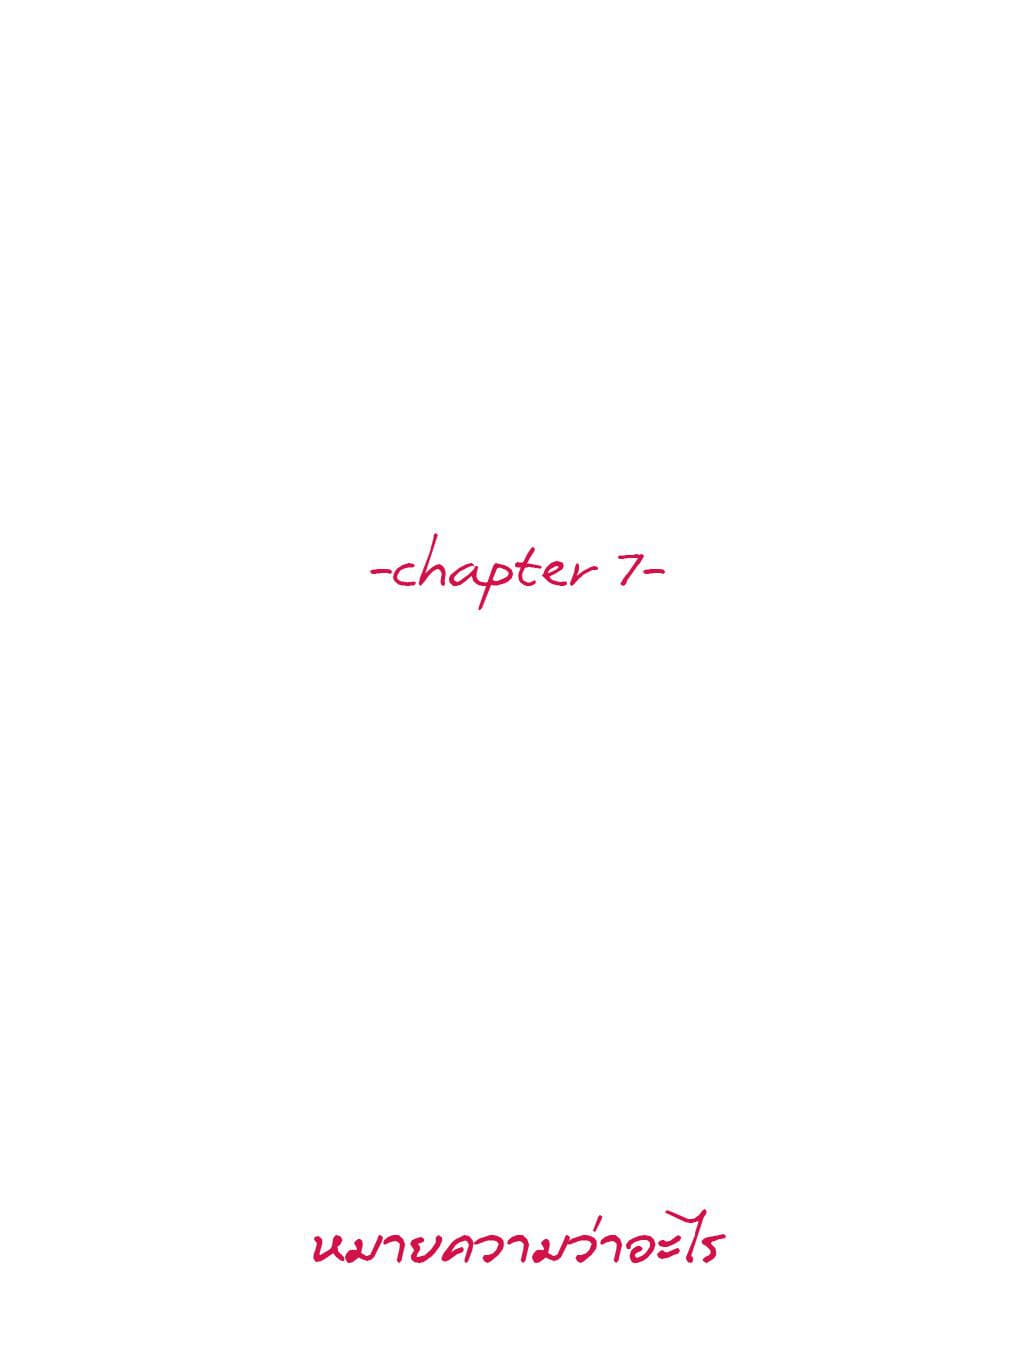 Chapter 7 - หมายความว่าอะไร